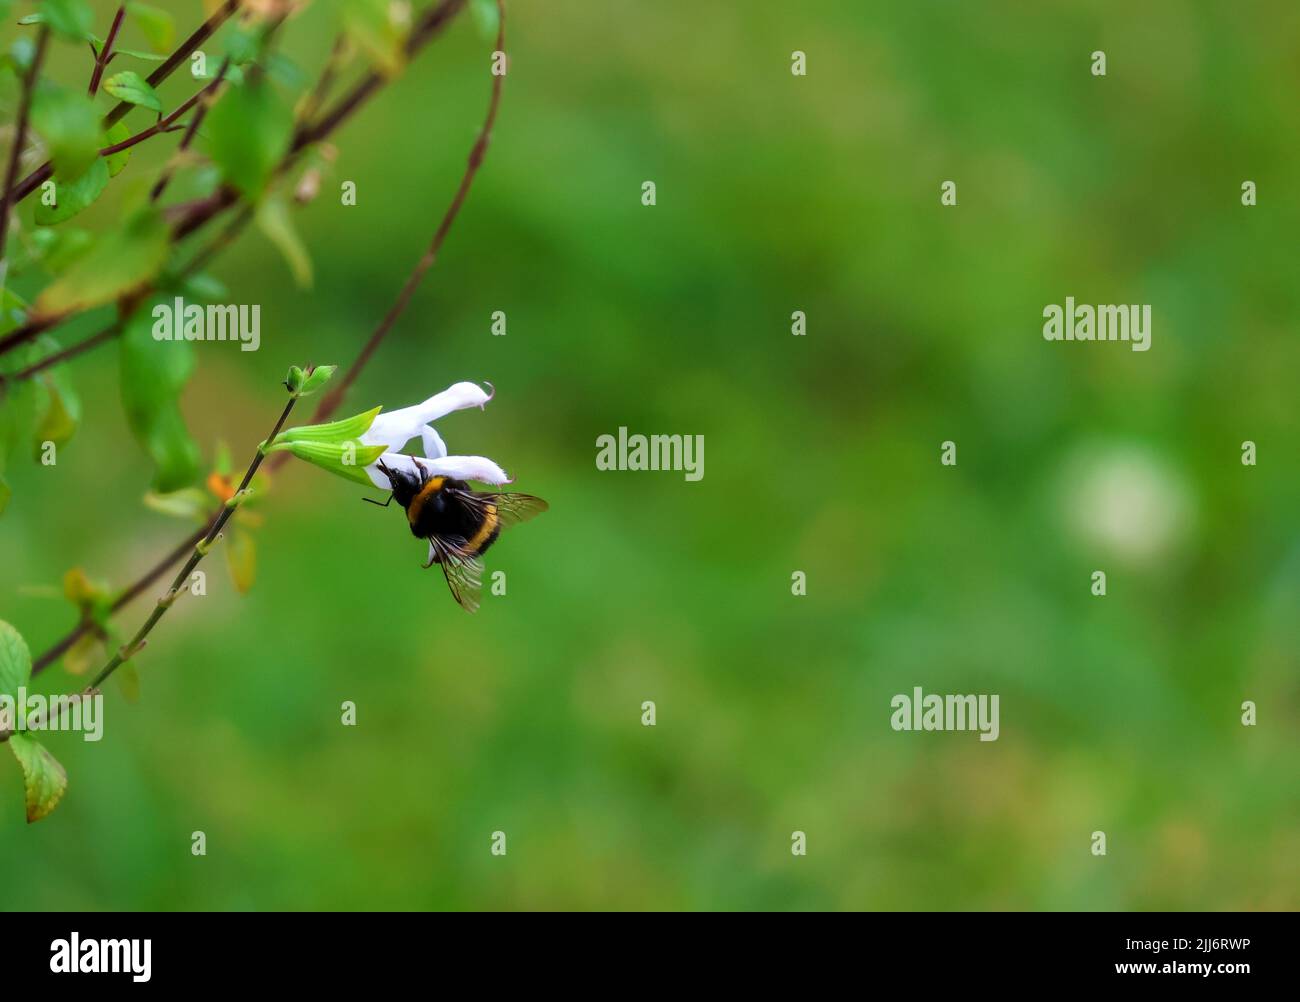 Honeybee pollinates or collects nectar from salvia flower in summer garden. Blurred background. Dublin, Ireland Stock Photo